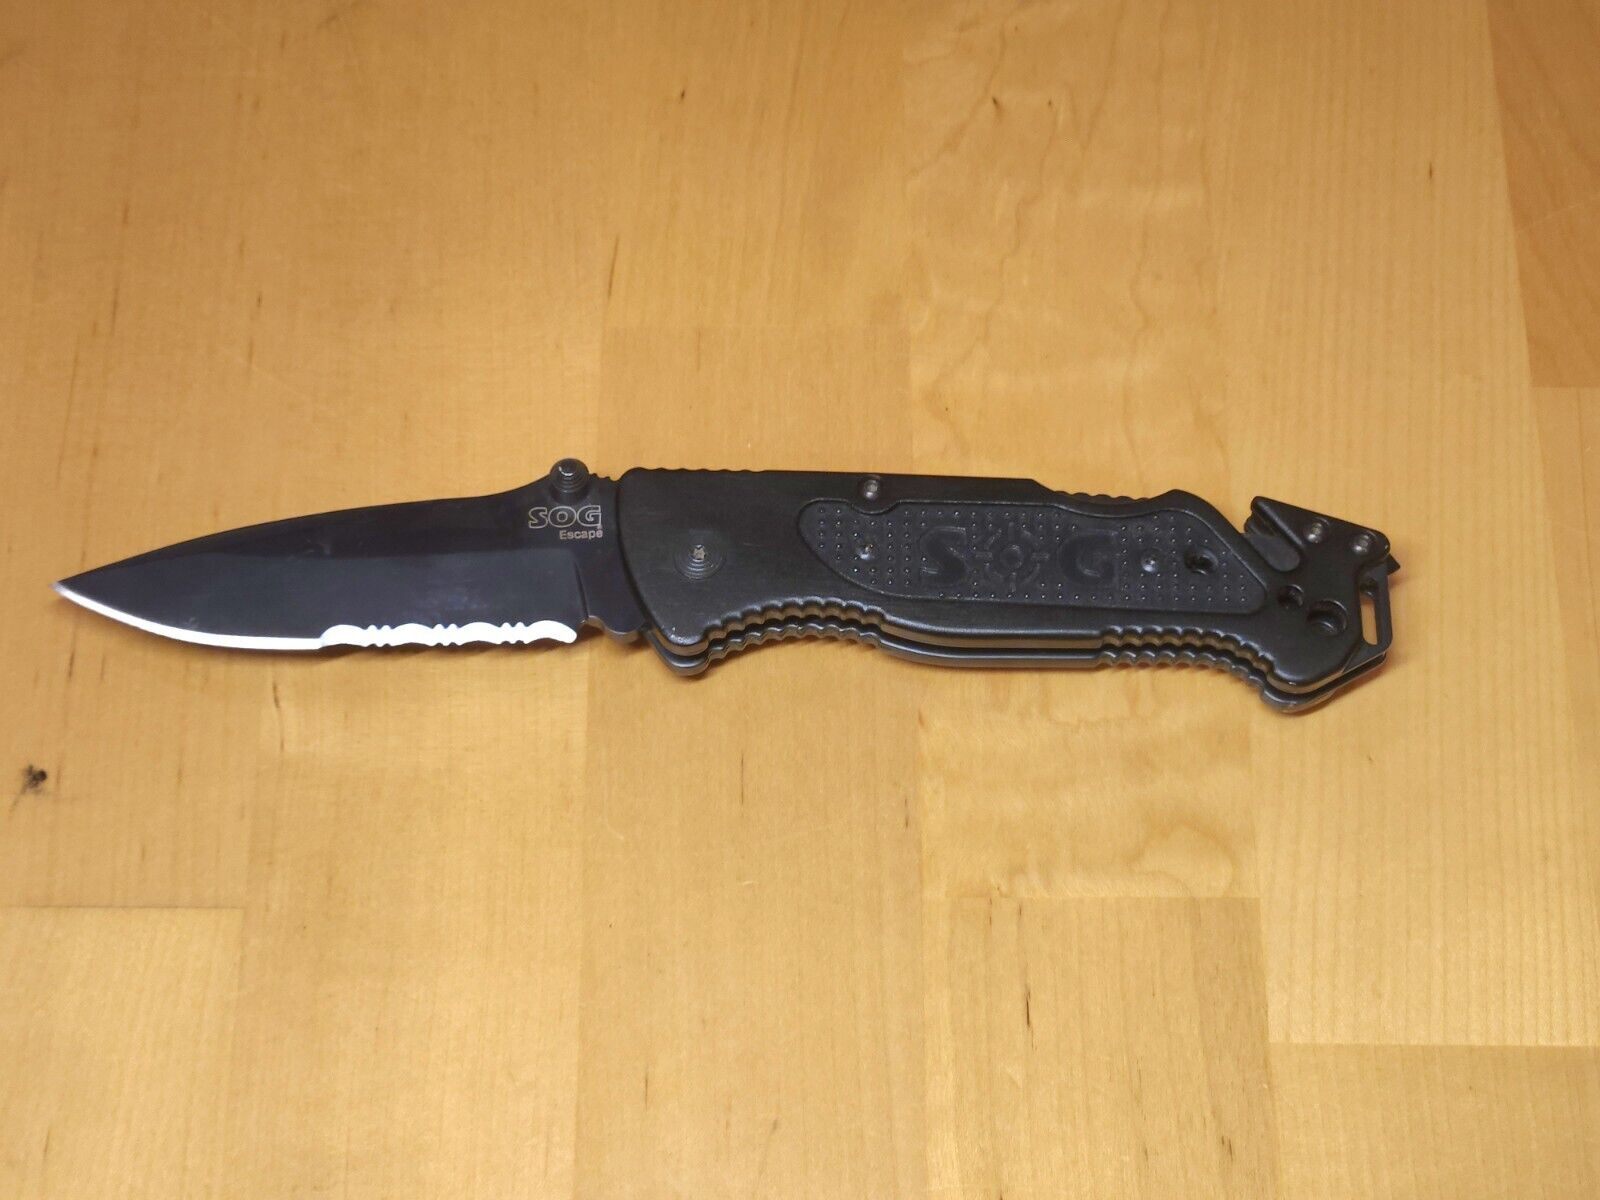 SOG Escape Pocket Knife Lockback Combo Edge Partially Serrated Blade